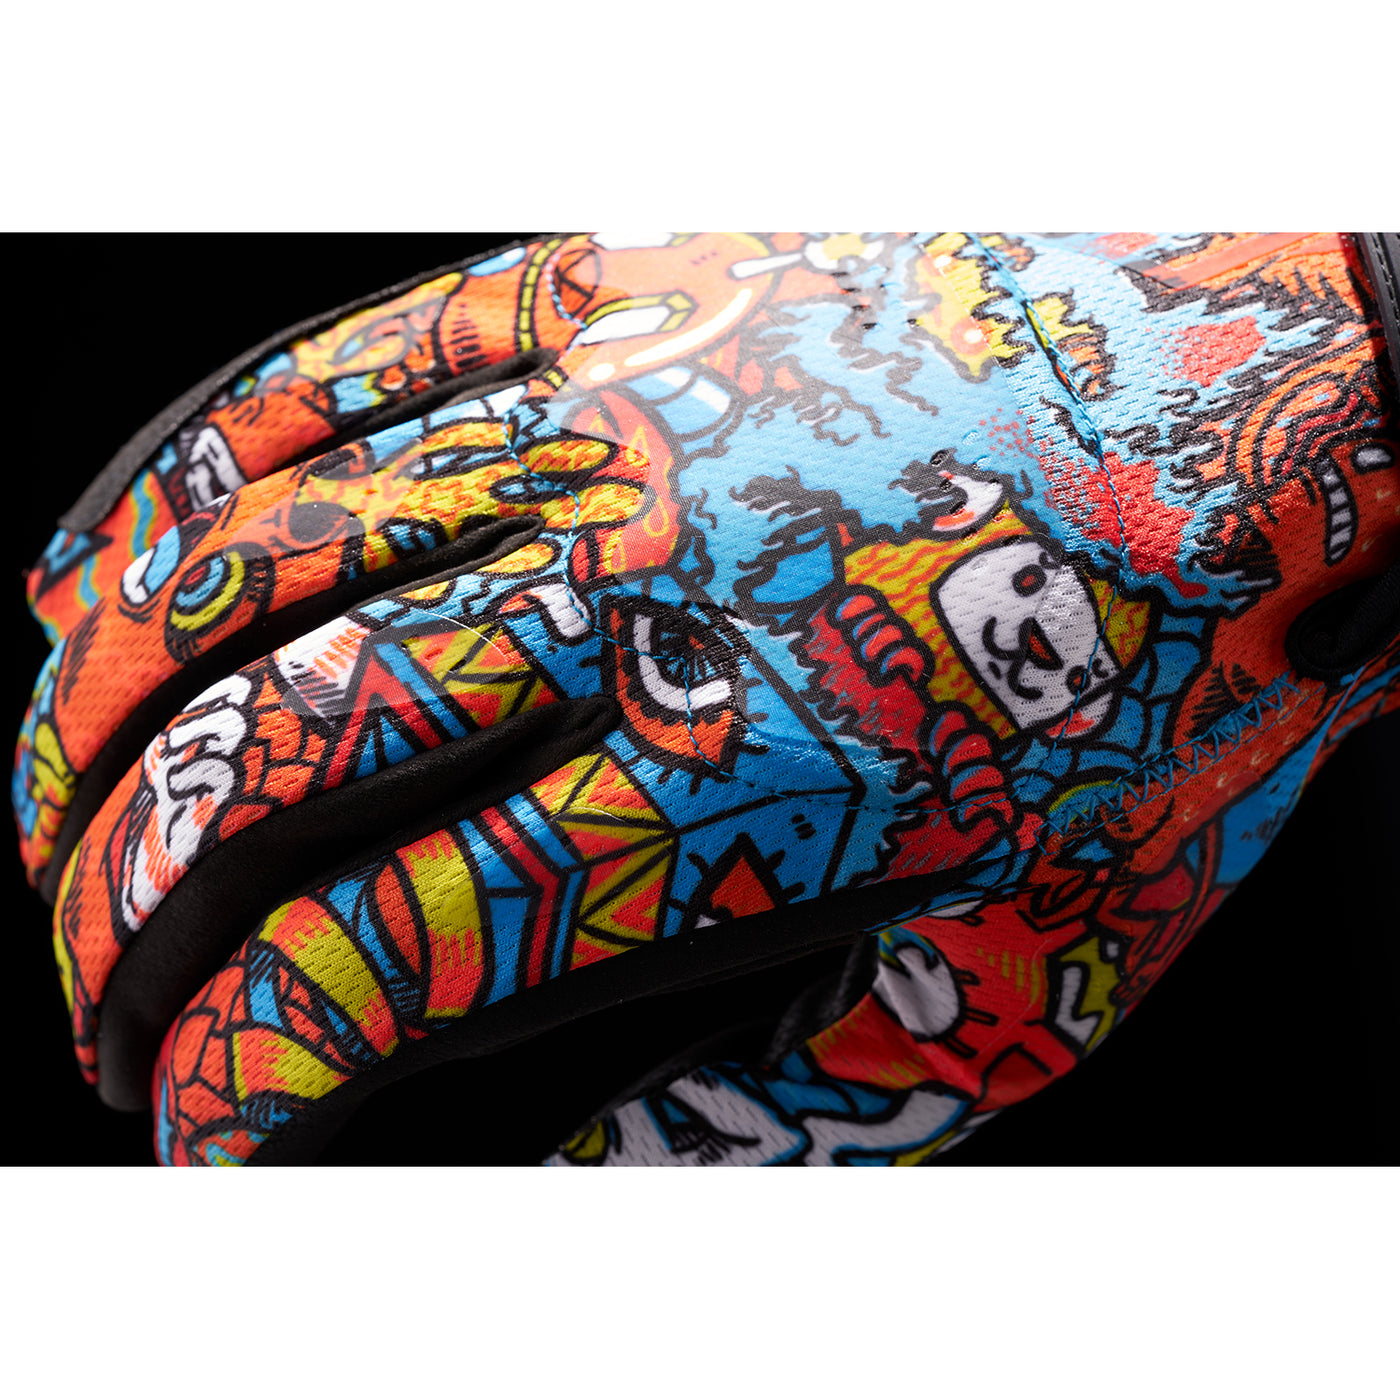 ICON Hooligan™ Redoodle Gloves